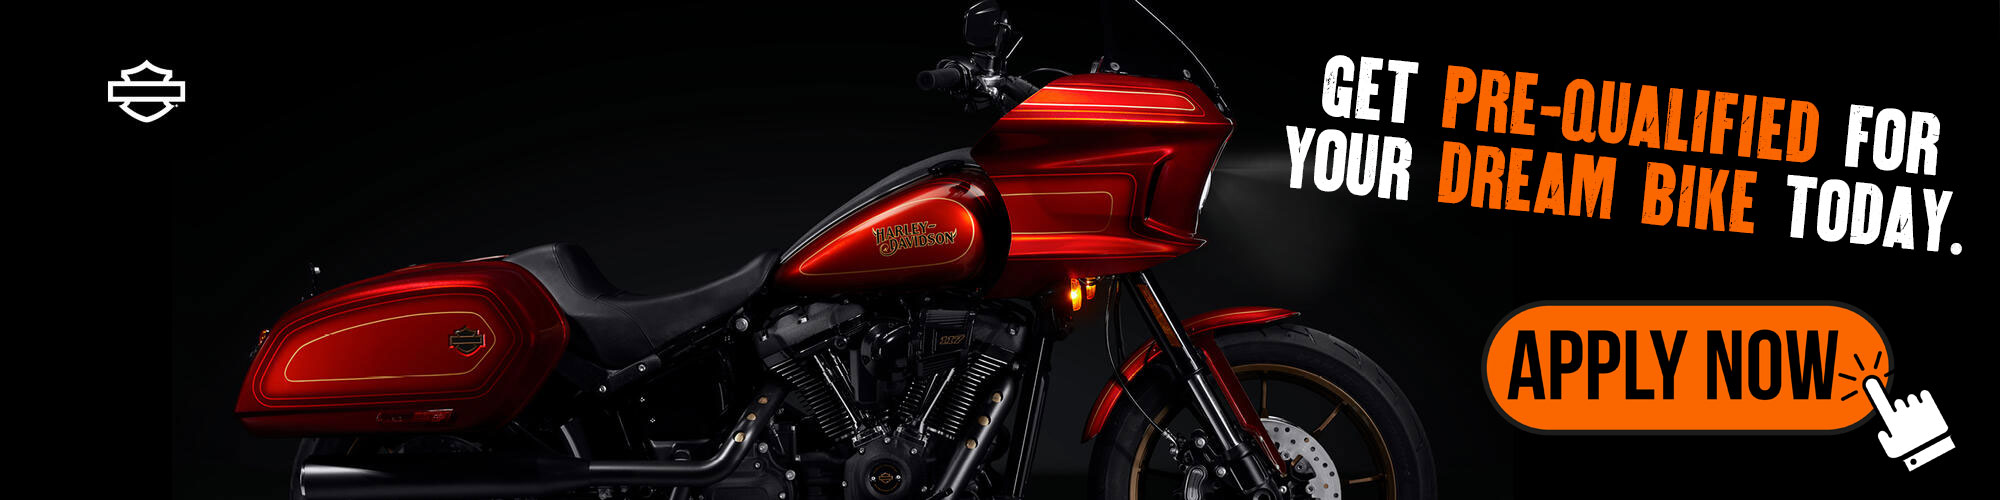 New Harley-Davidson Motorcycles For Sale at Big-Sky Harley-Davidson in Great Falls, MT